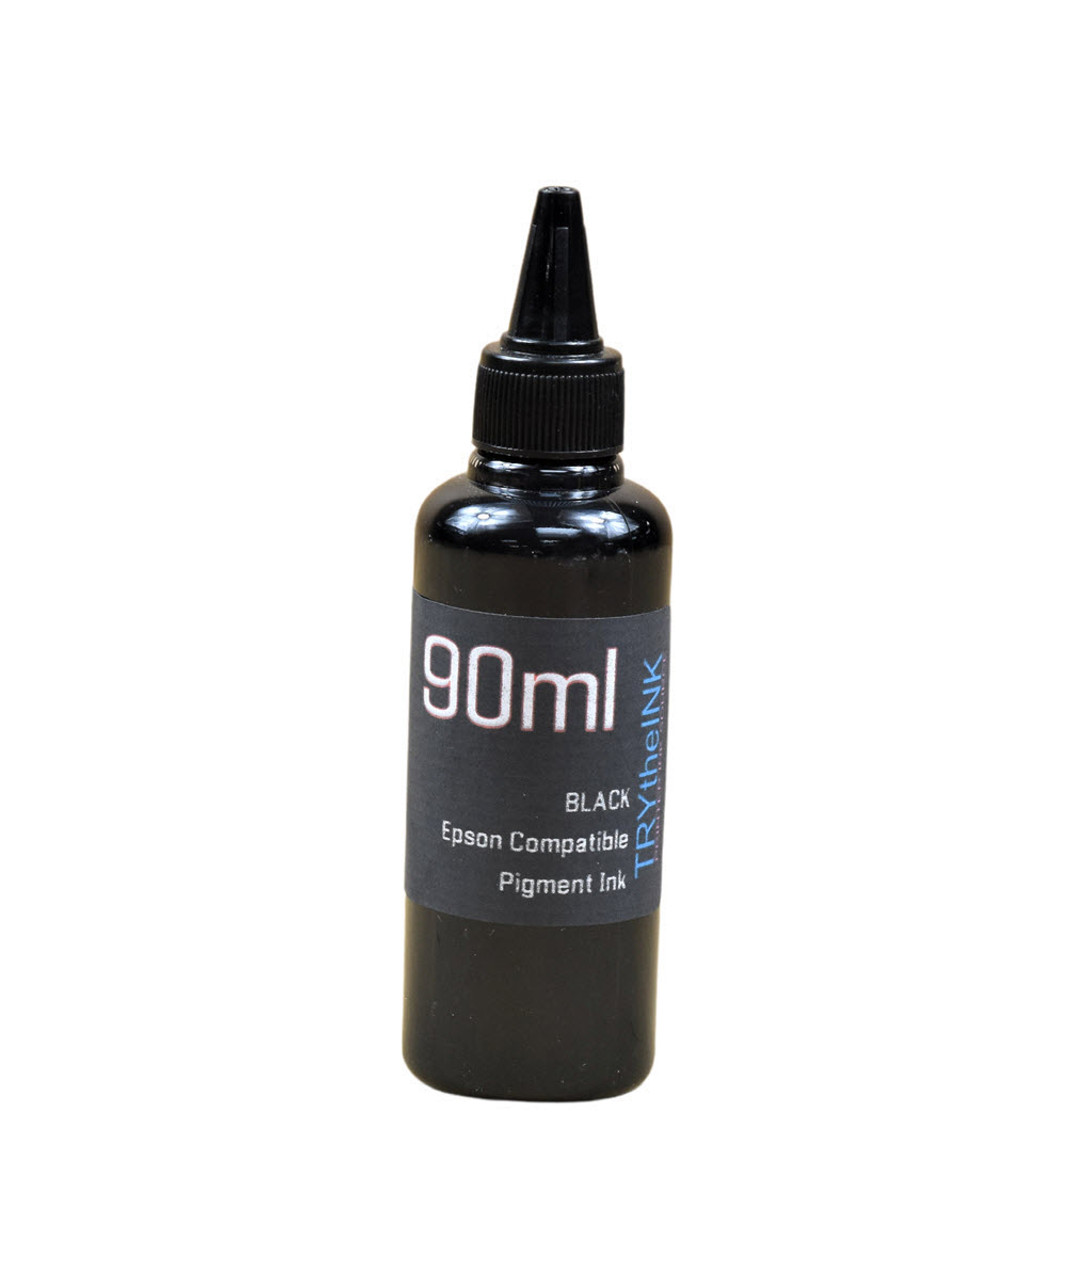 Black 90ml bottle Pigment Ink for Epson WorkForce WF-2520 WF-2530 WF-2540 Printers
